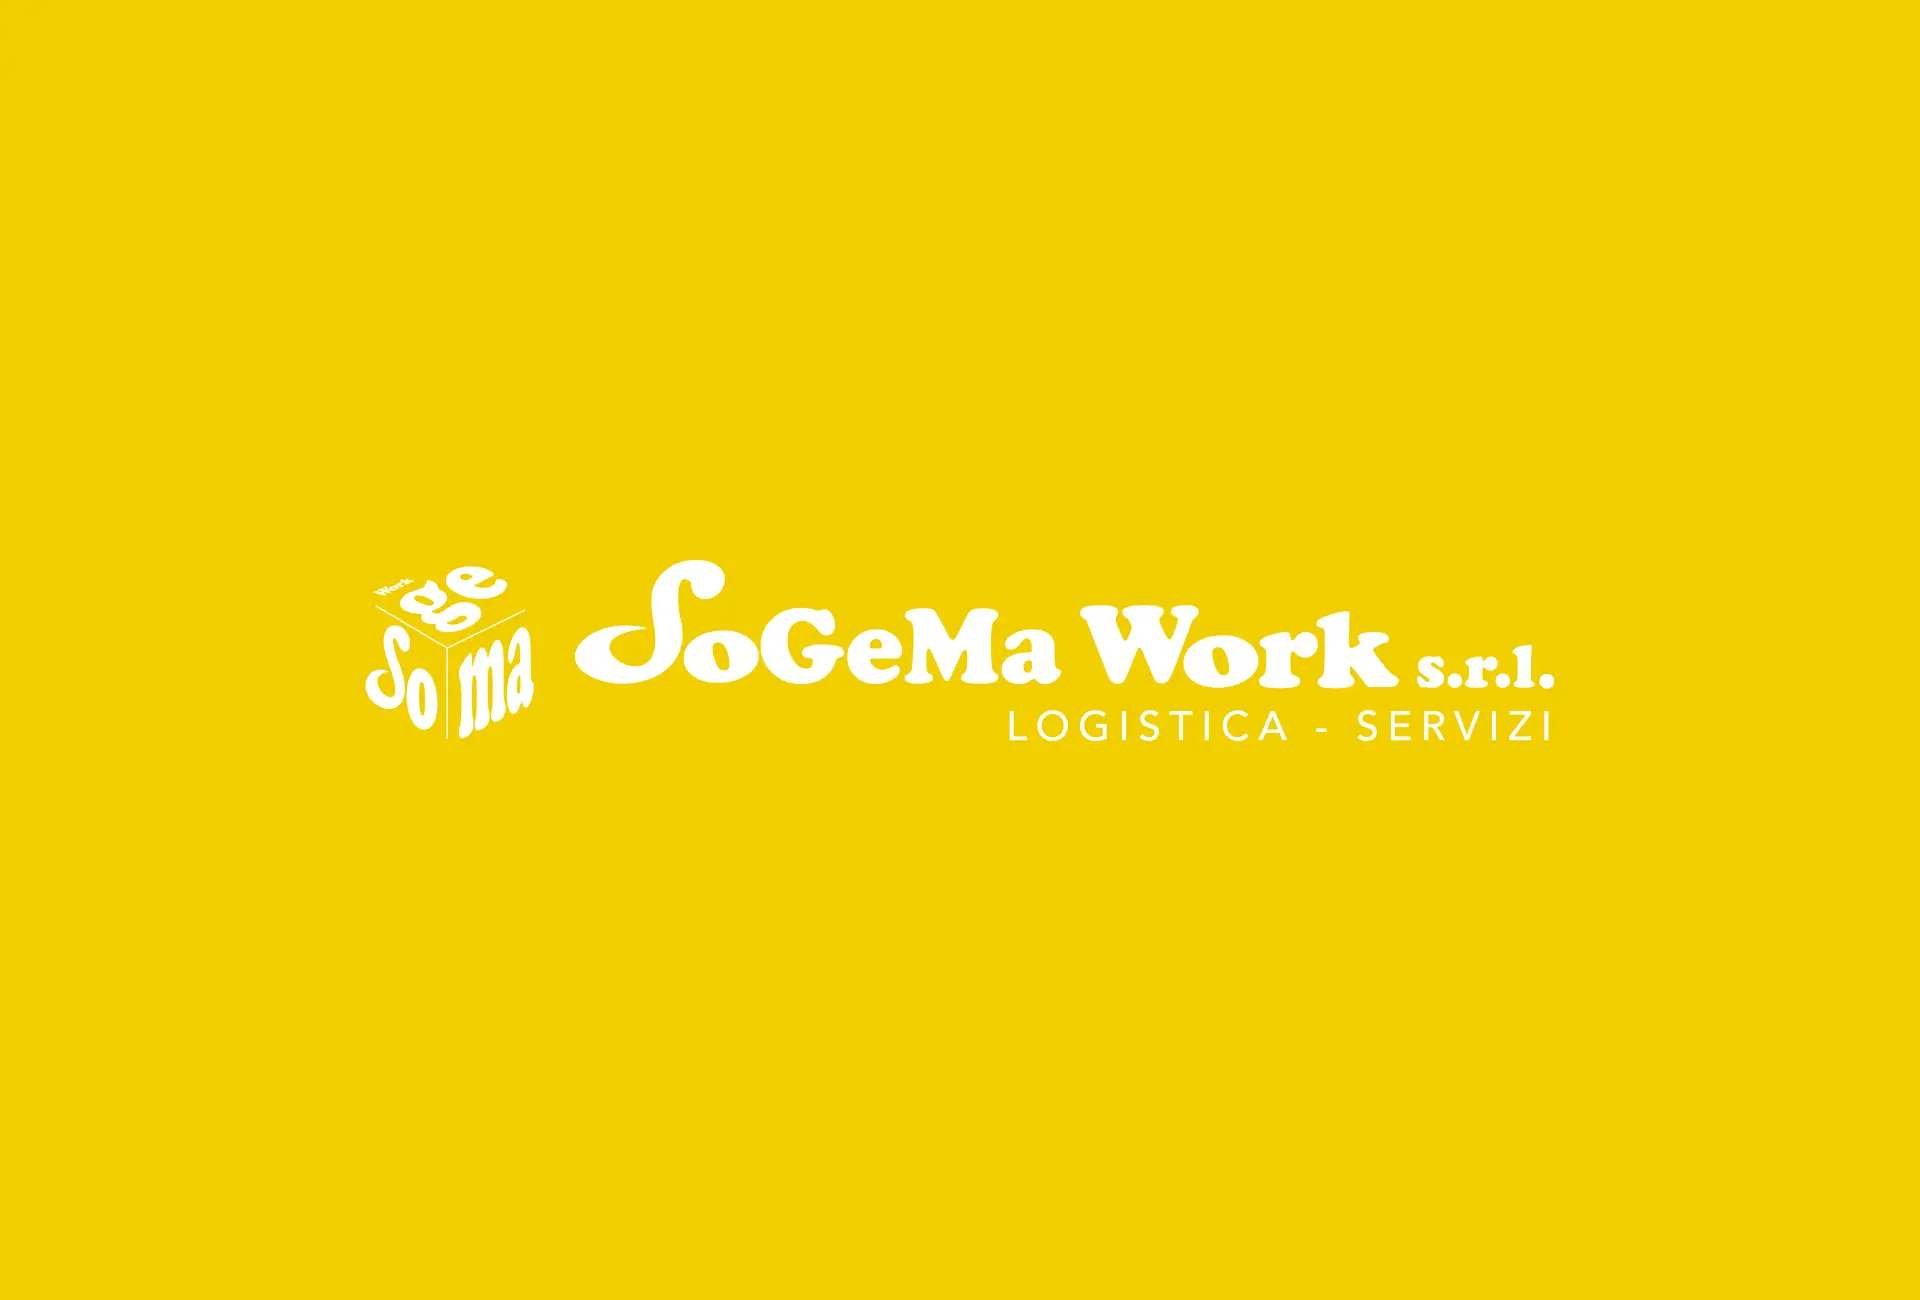 homepage-sogema-work-banner-img